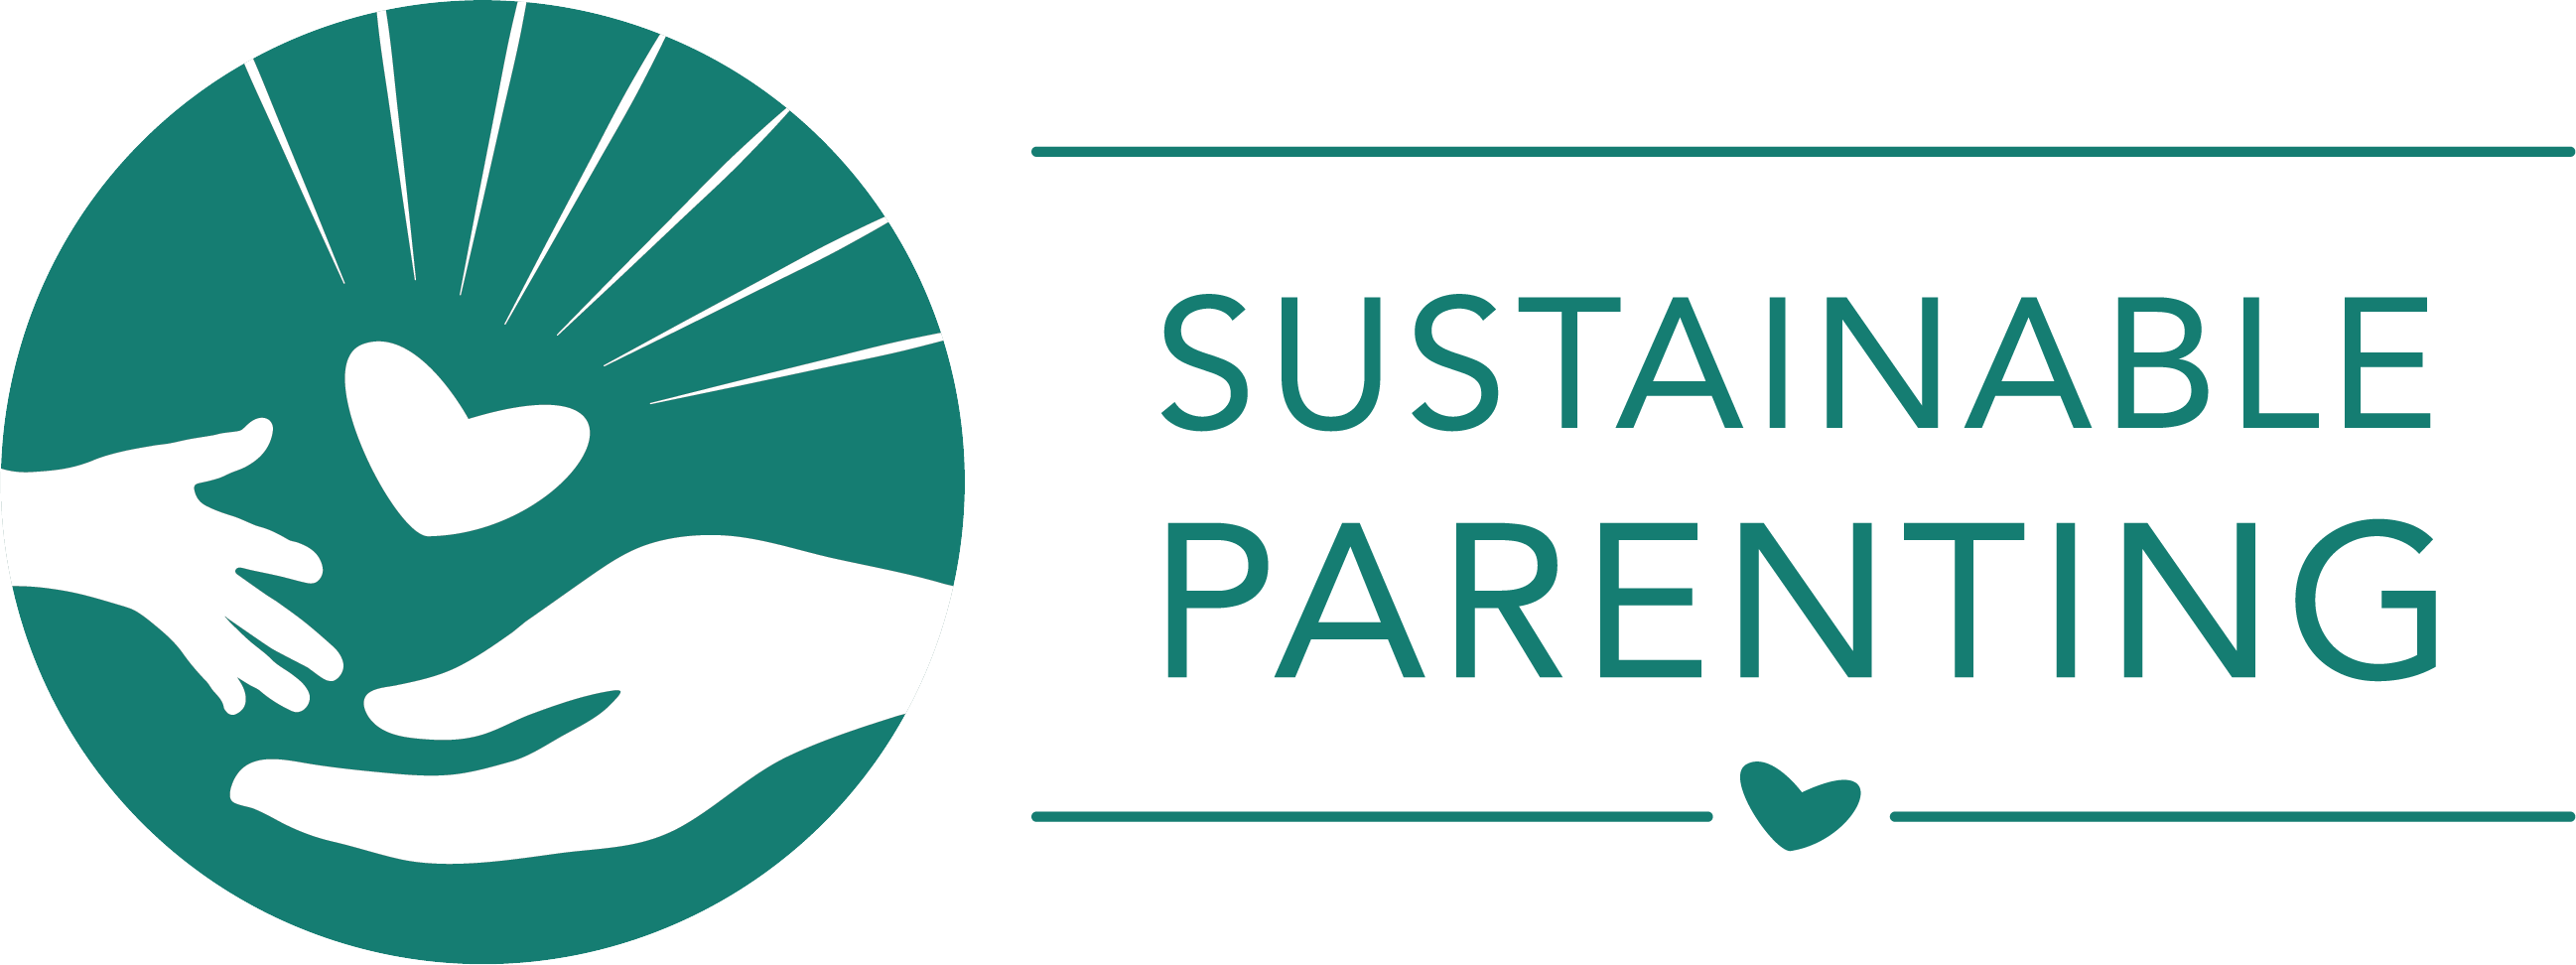 Sustainable Parenting logo